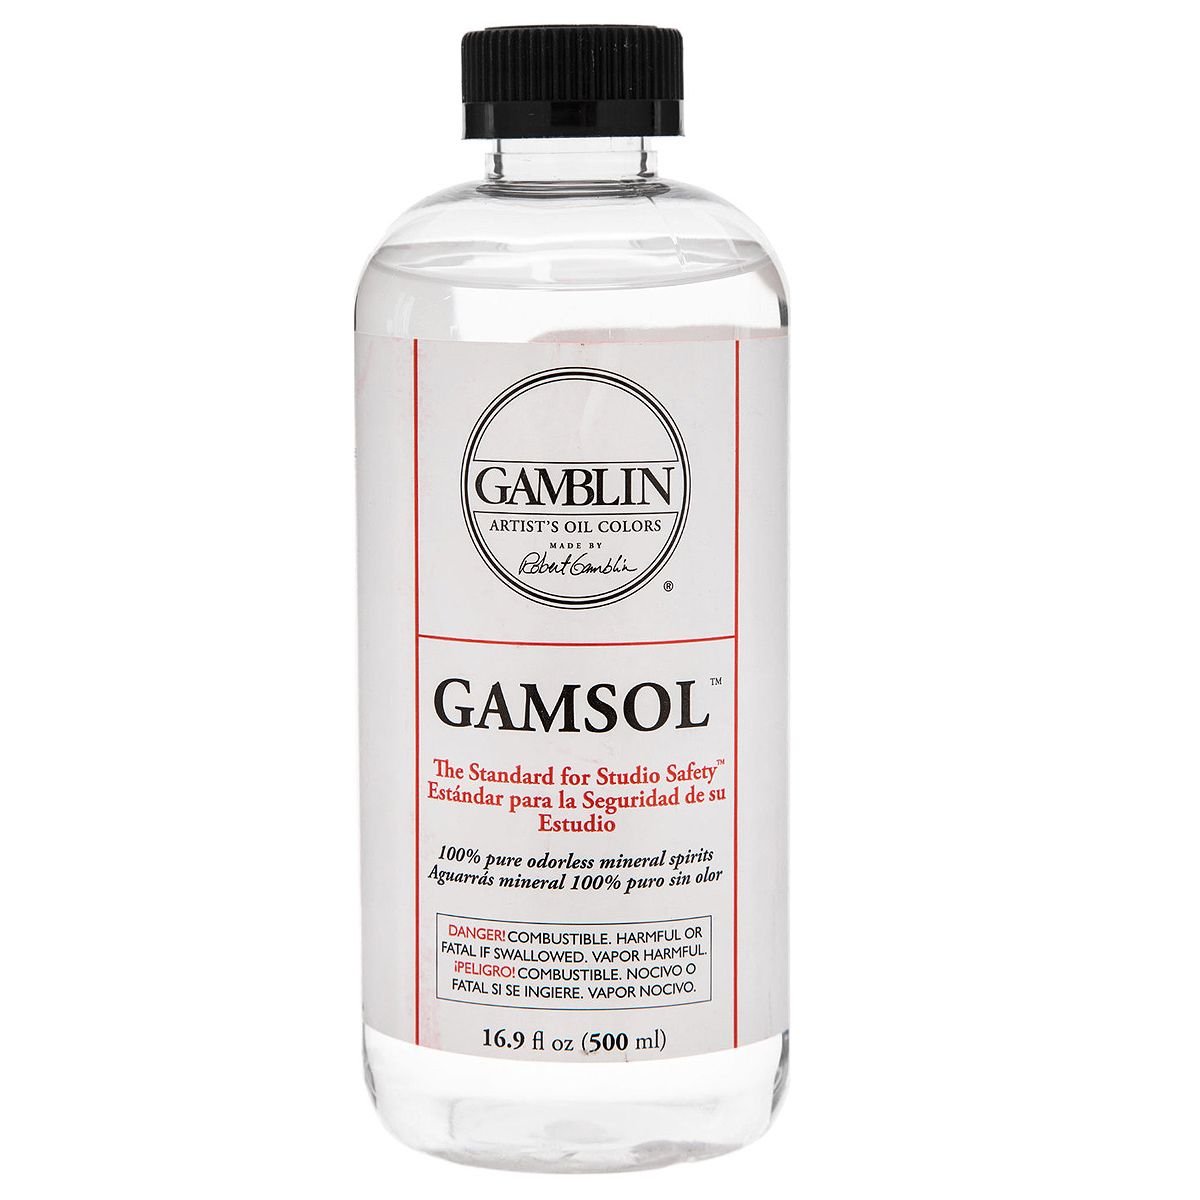 PACK OF 2] GAMBLIN GAMSOL ODORLESS MINERAL SPIRITS 16.9 OZ (500 ML